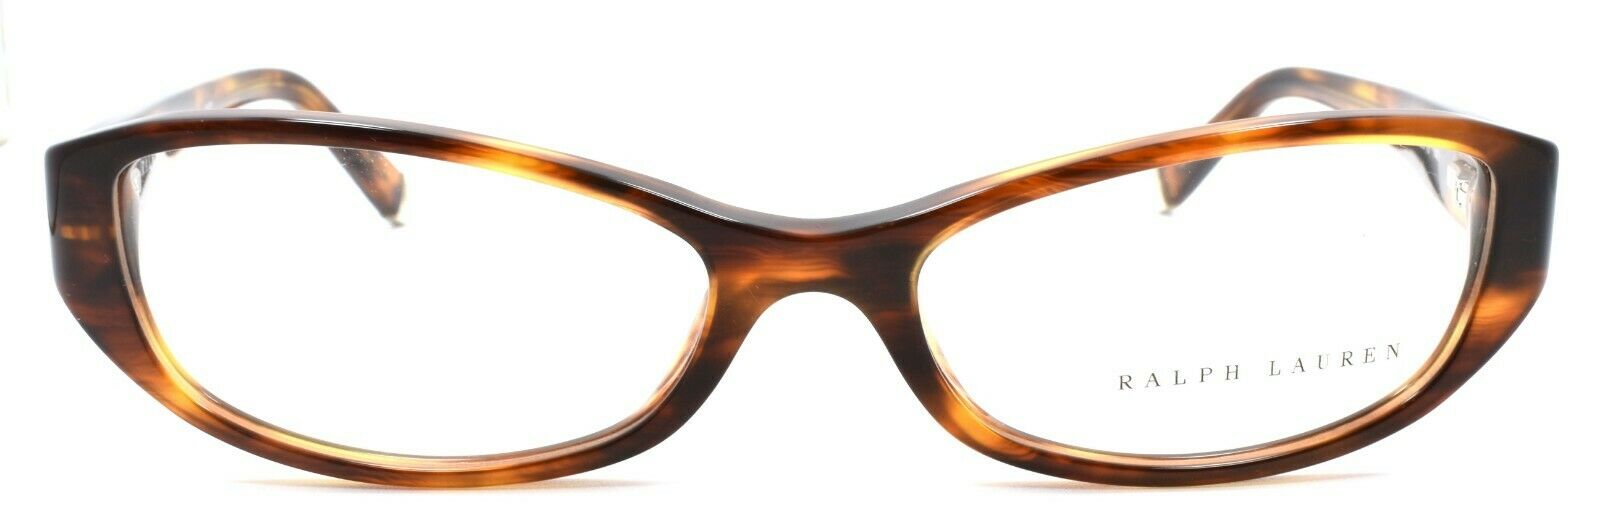 2-Ralph Lauren RL 6108 5007 Women's Eyeglasses Frames 52-16-140 Brown Tortoise-8053672145625-IKSpecs